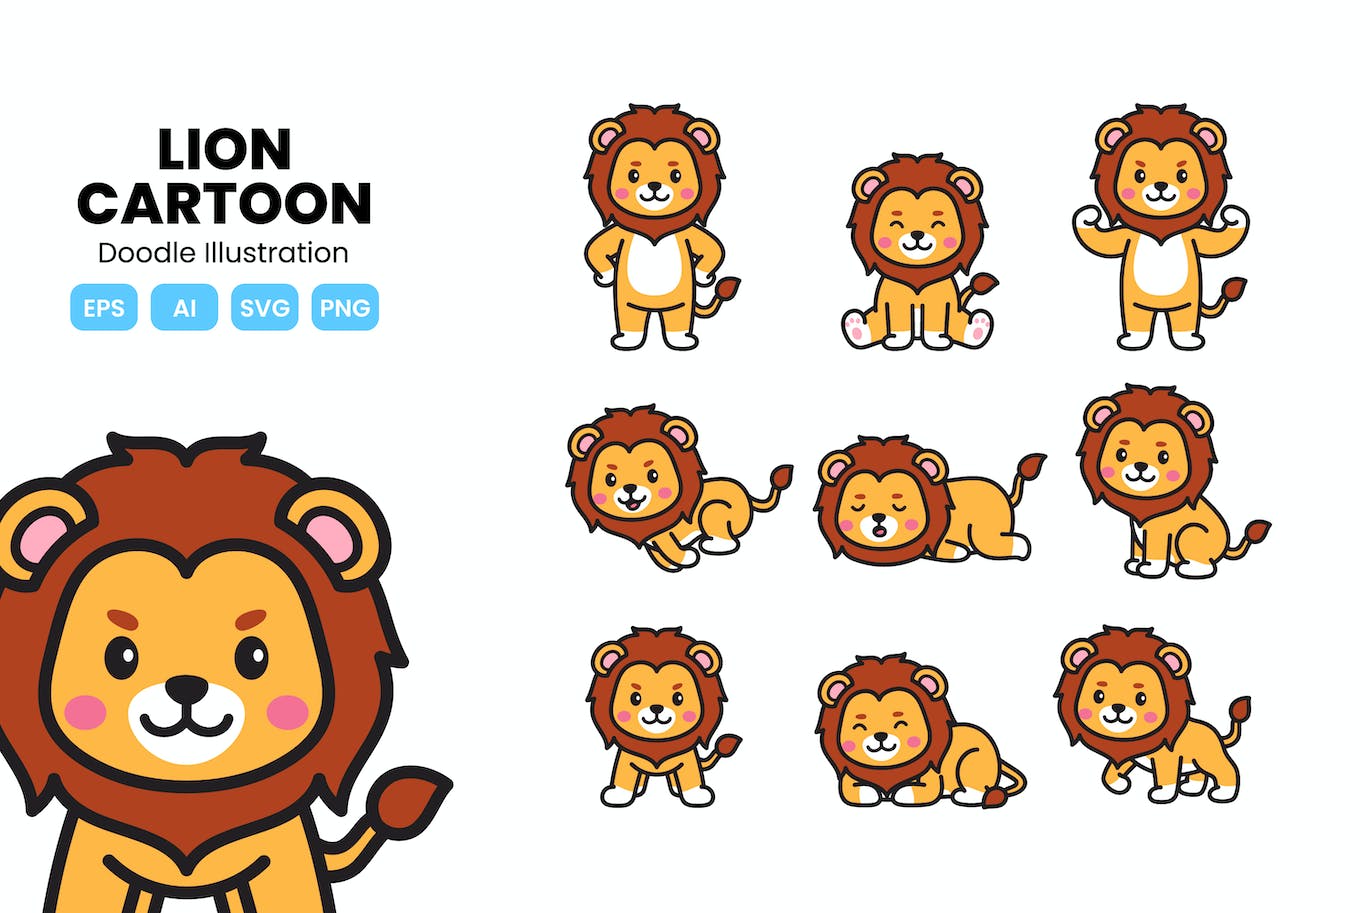 狮子涂鸦卡通 (AI,EPS,PNG,SVG)